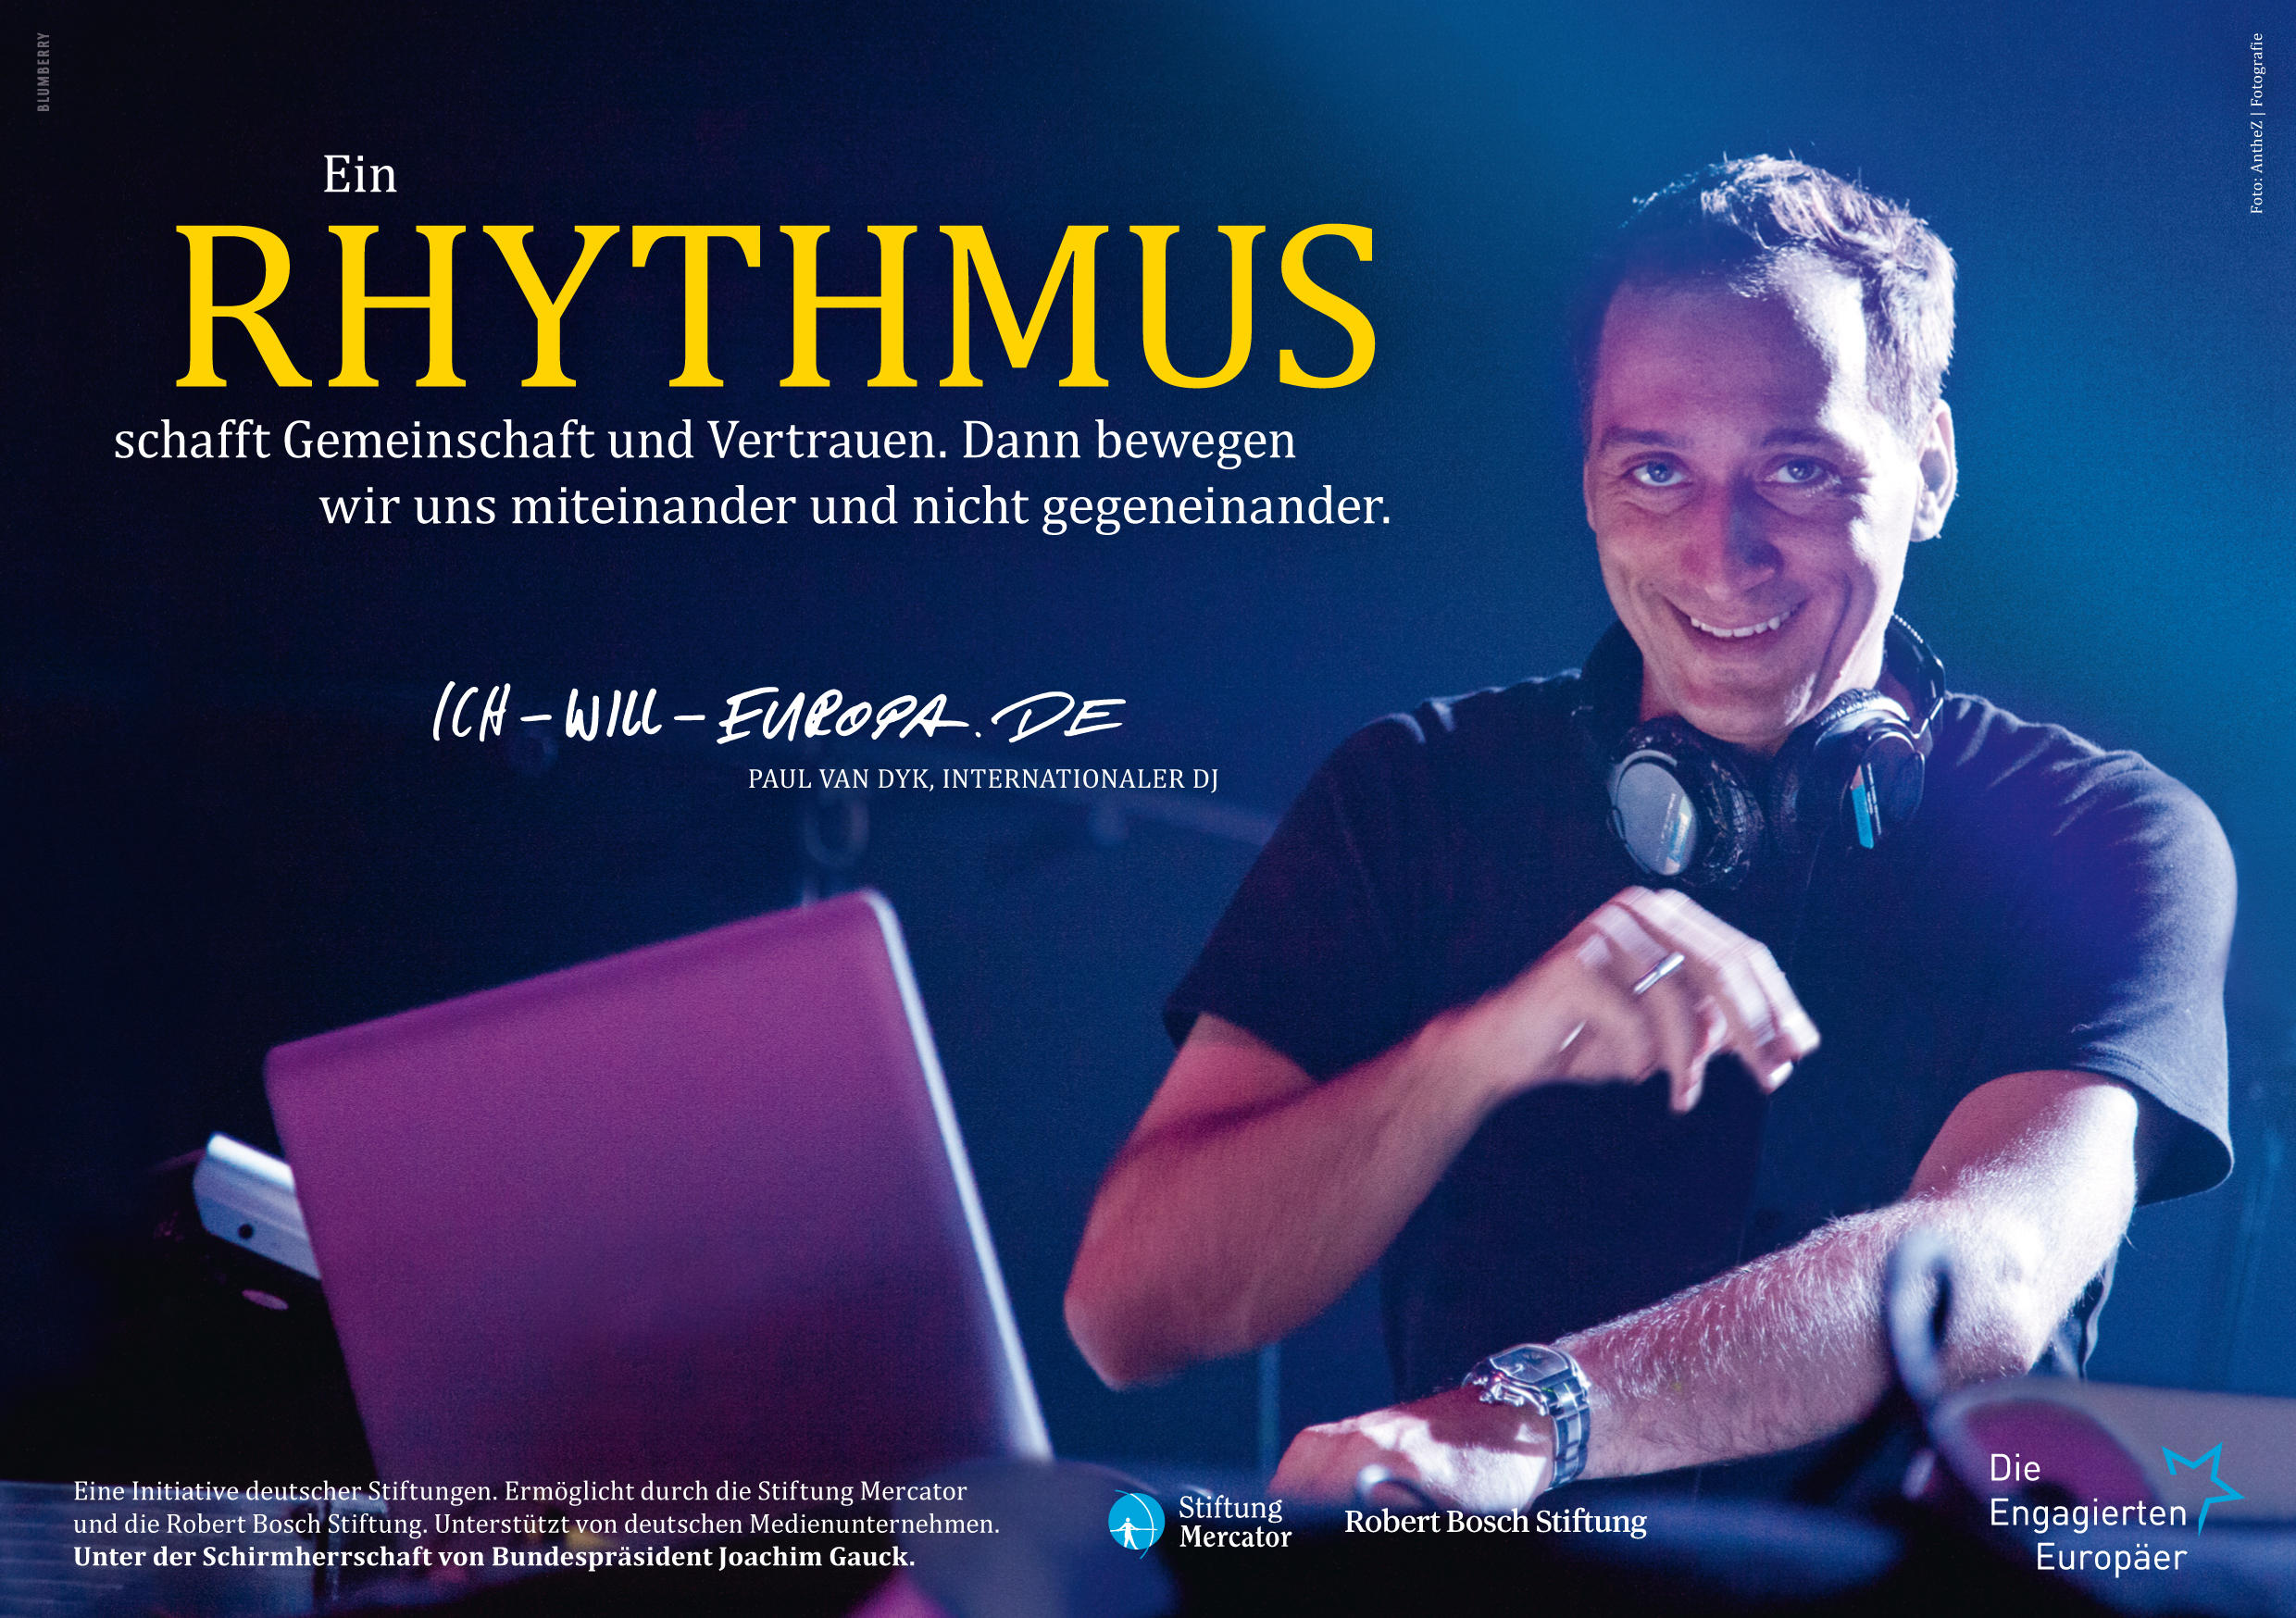 RHYTHMUS - DJ Paul van Dyk